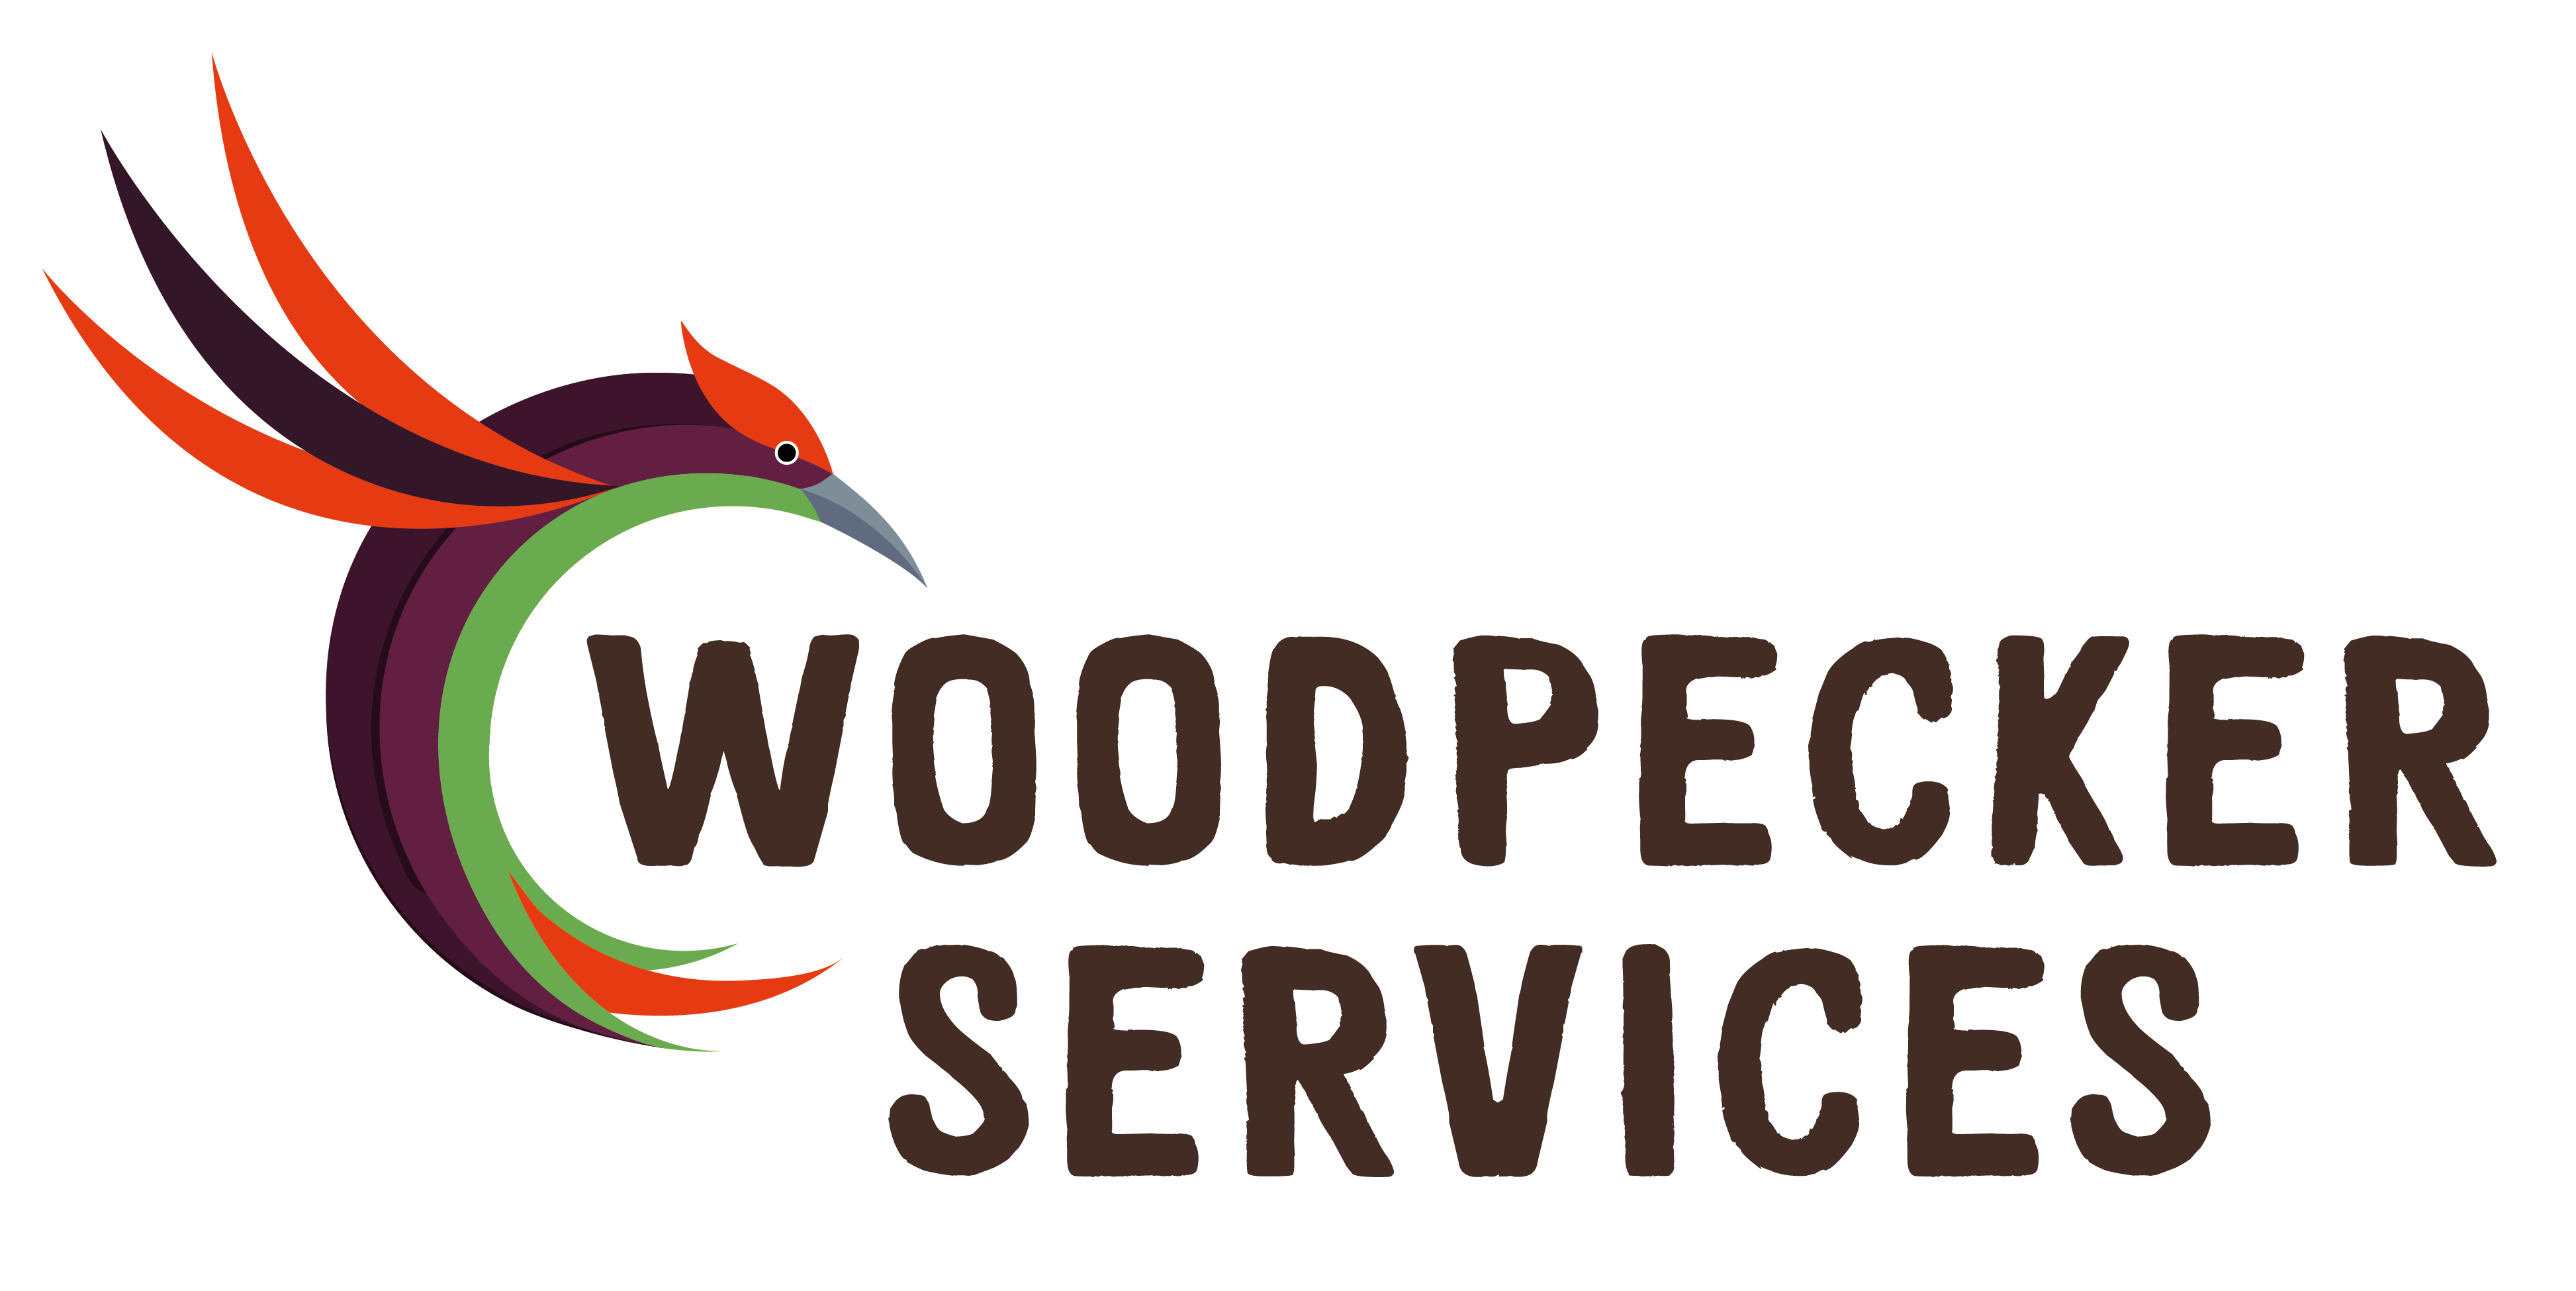 Woodpecker Services